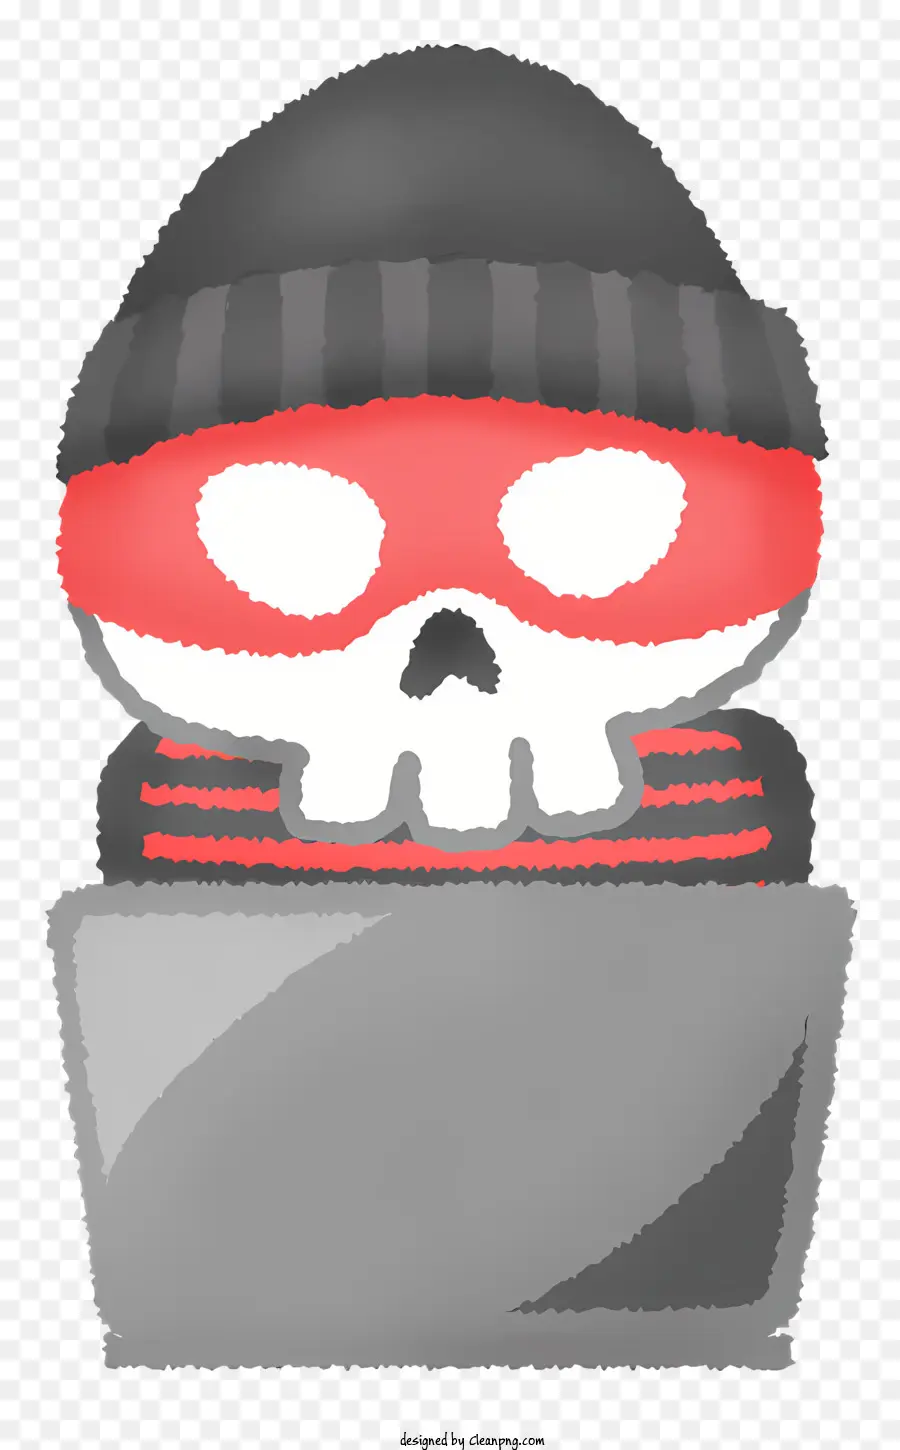 icon cartoon skull red hat black and red bandana skull's eyes